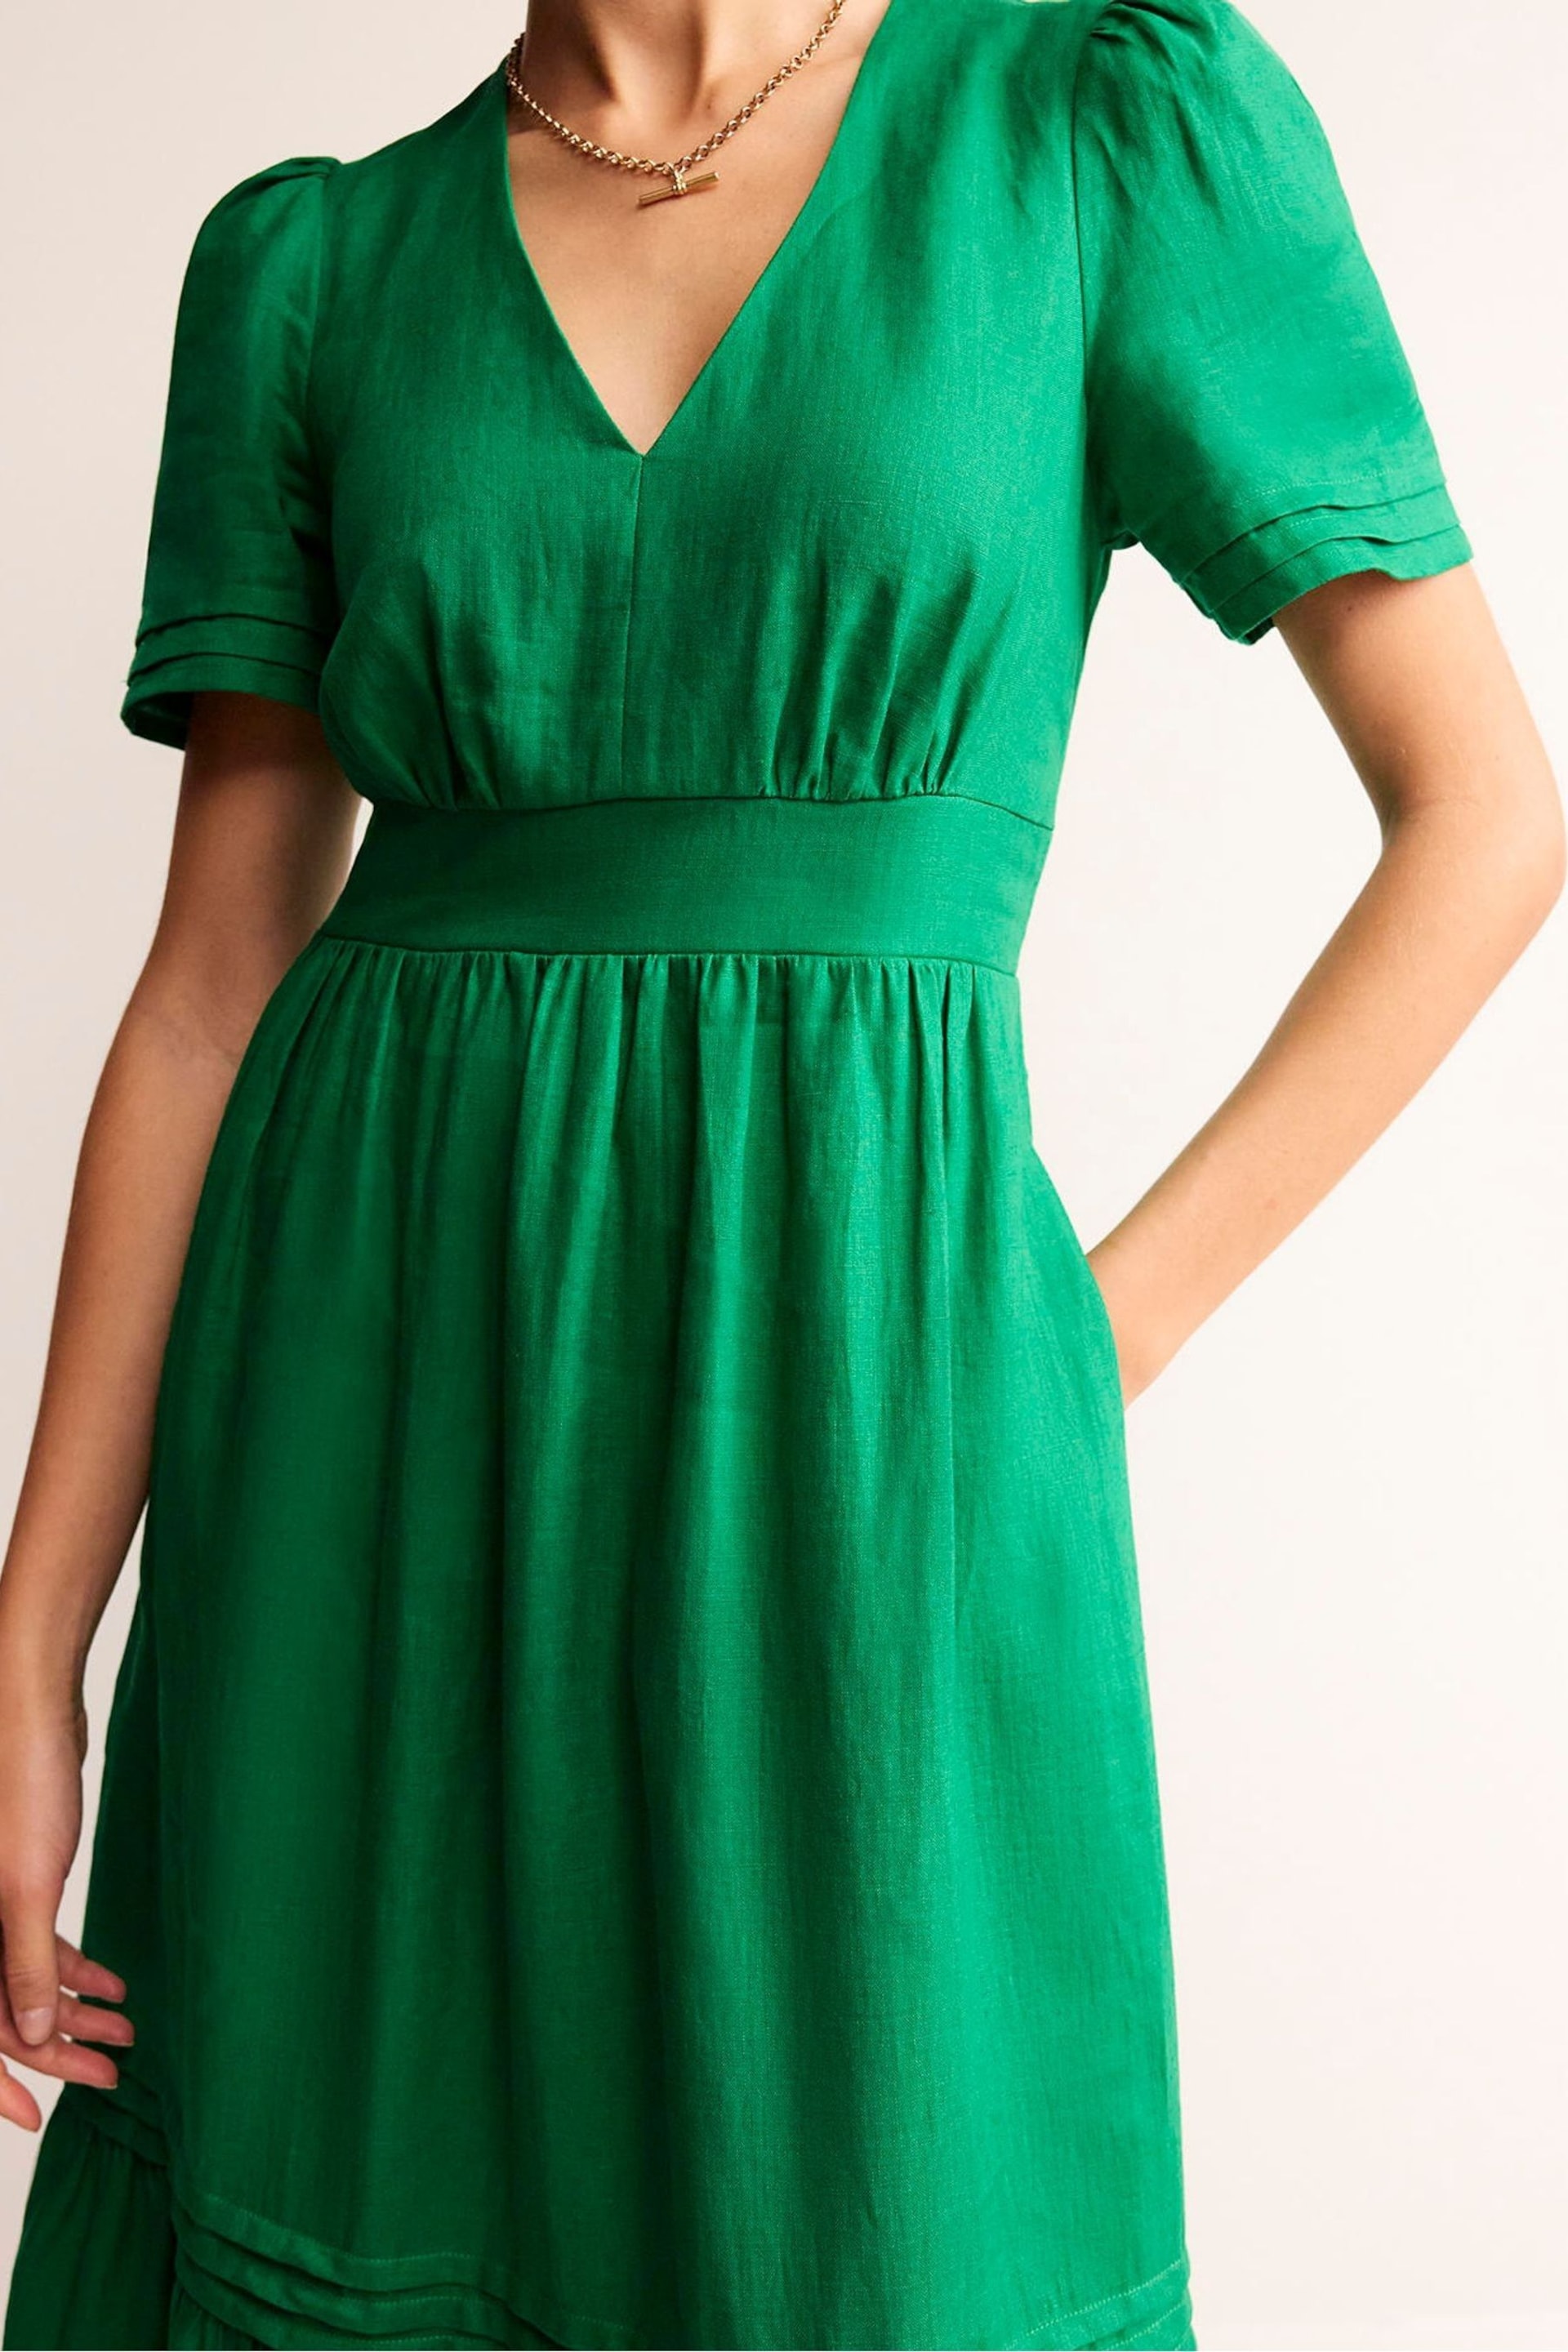 Boden Green Eve Linen Midi Dress - Image 5 of 6